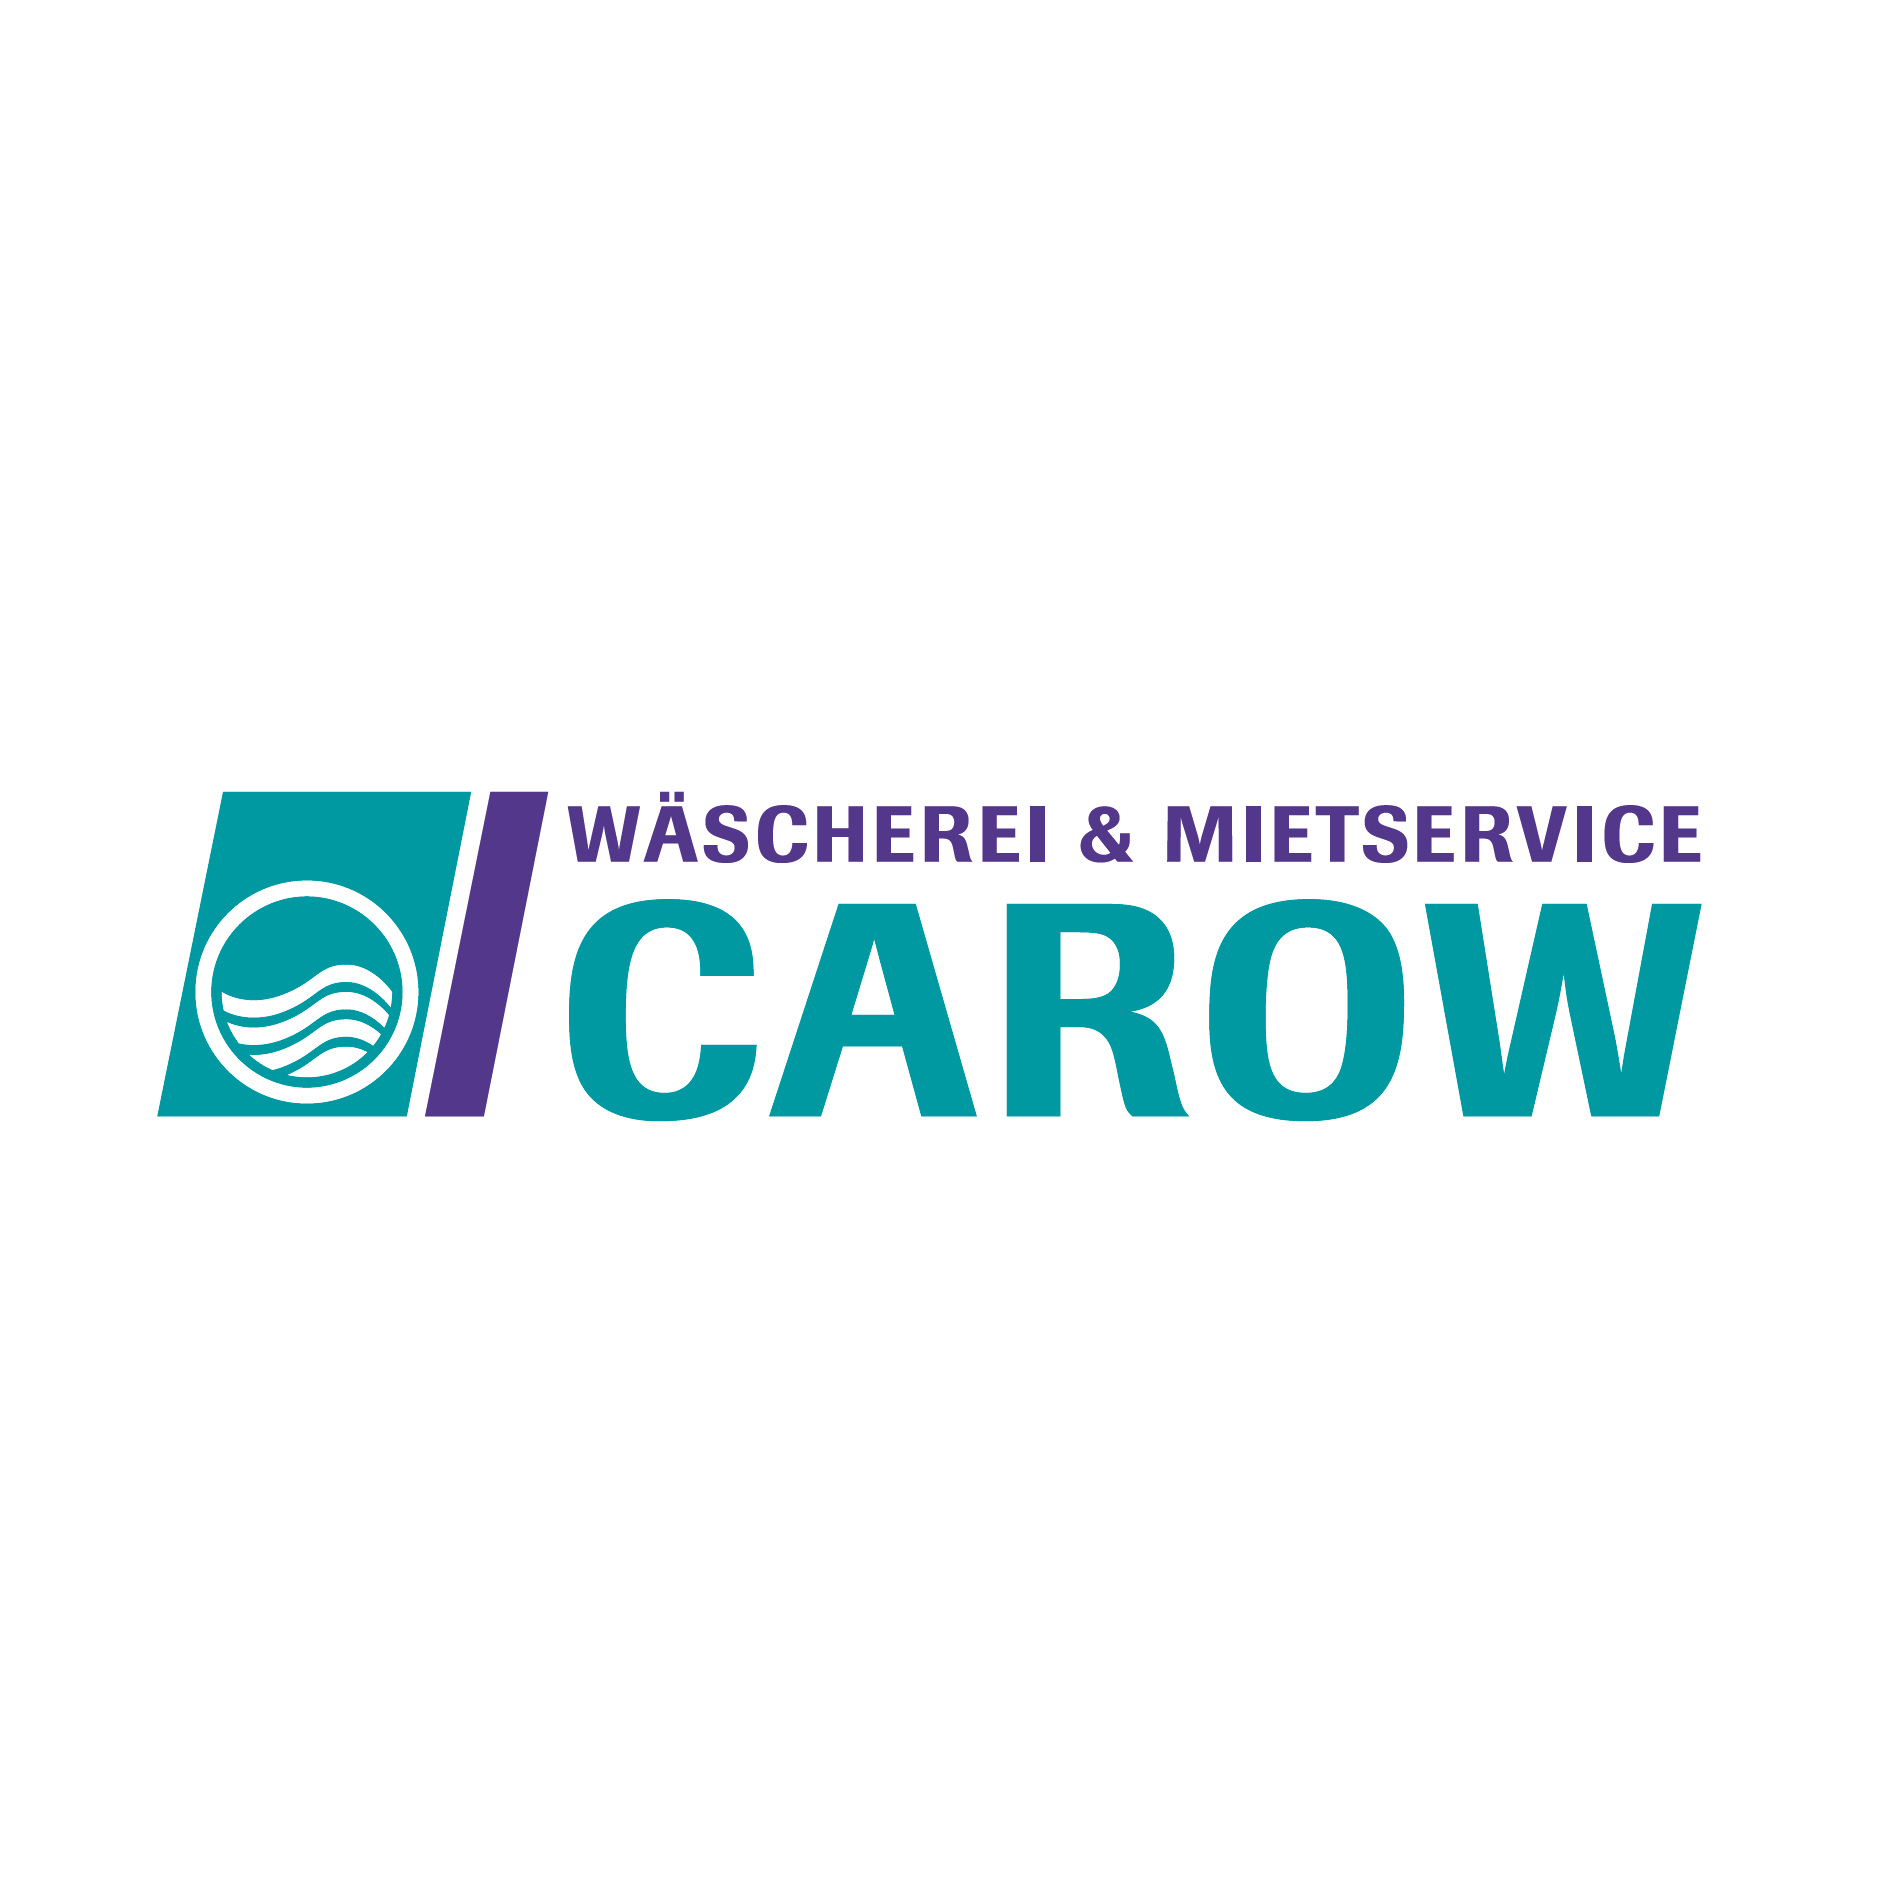 Wäscherei Carow GmbH & Co. KG Logo